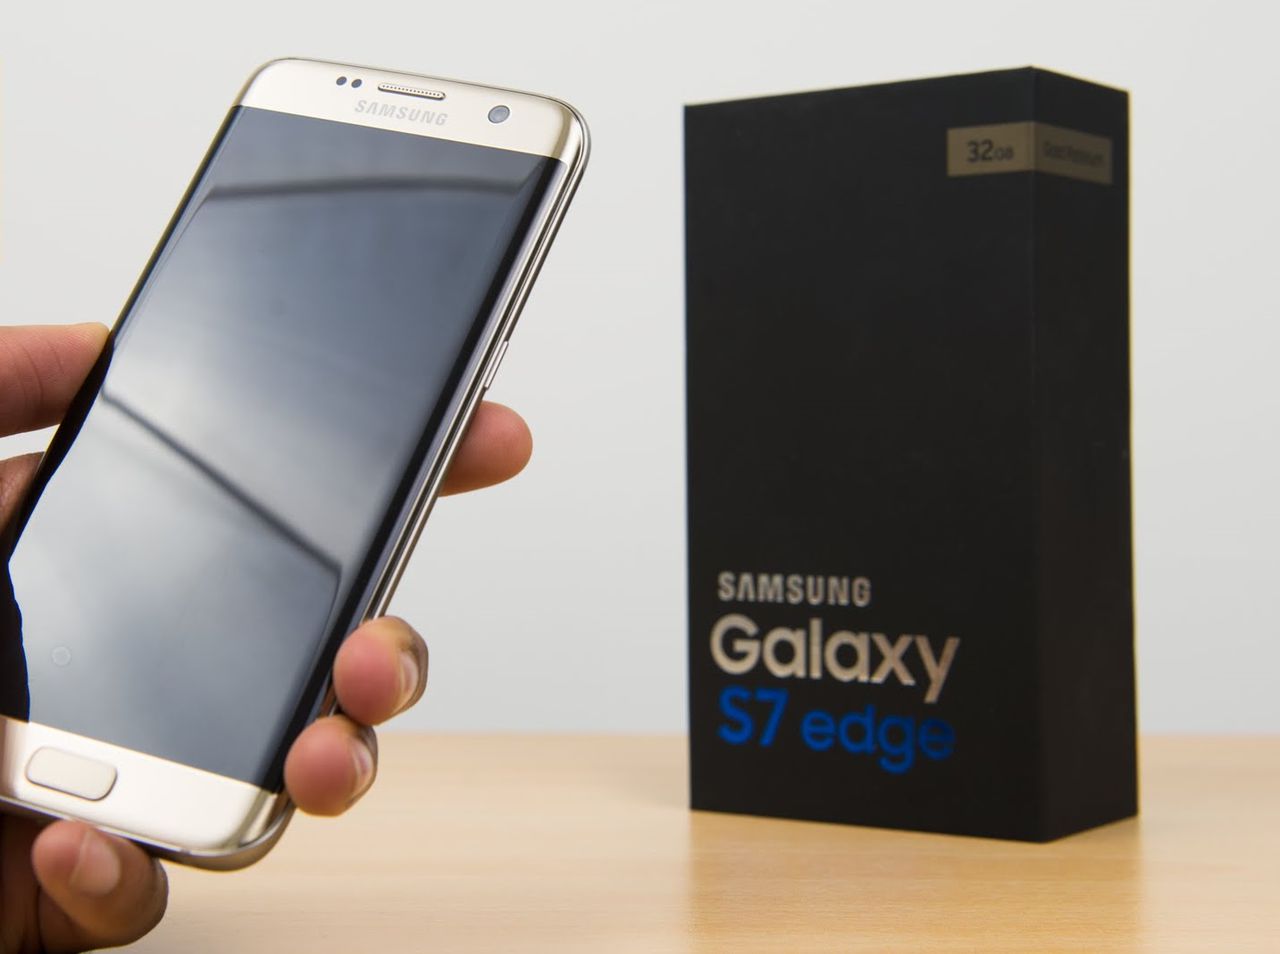 Samsung Galaxy s7 Gold